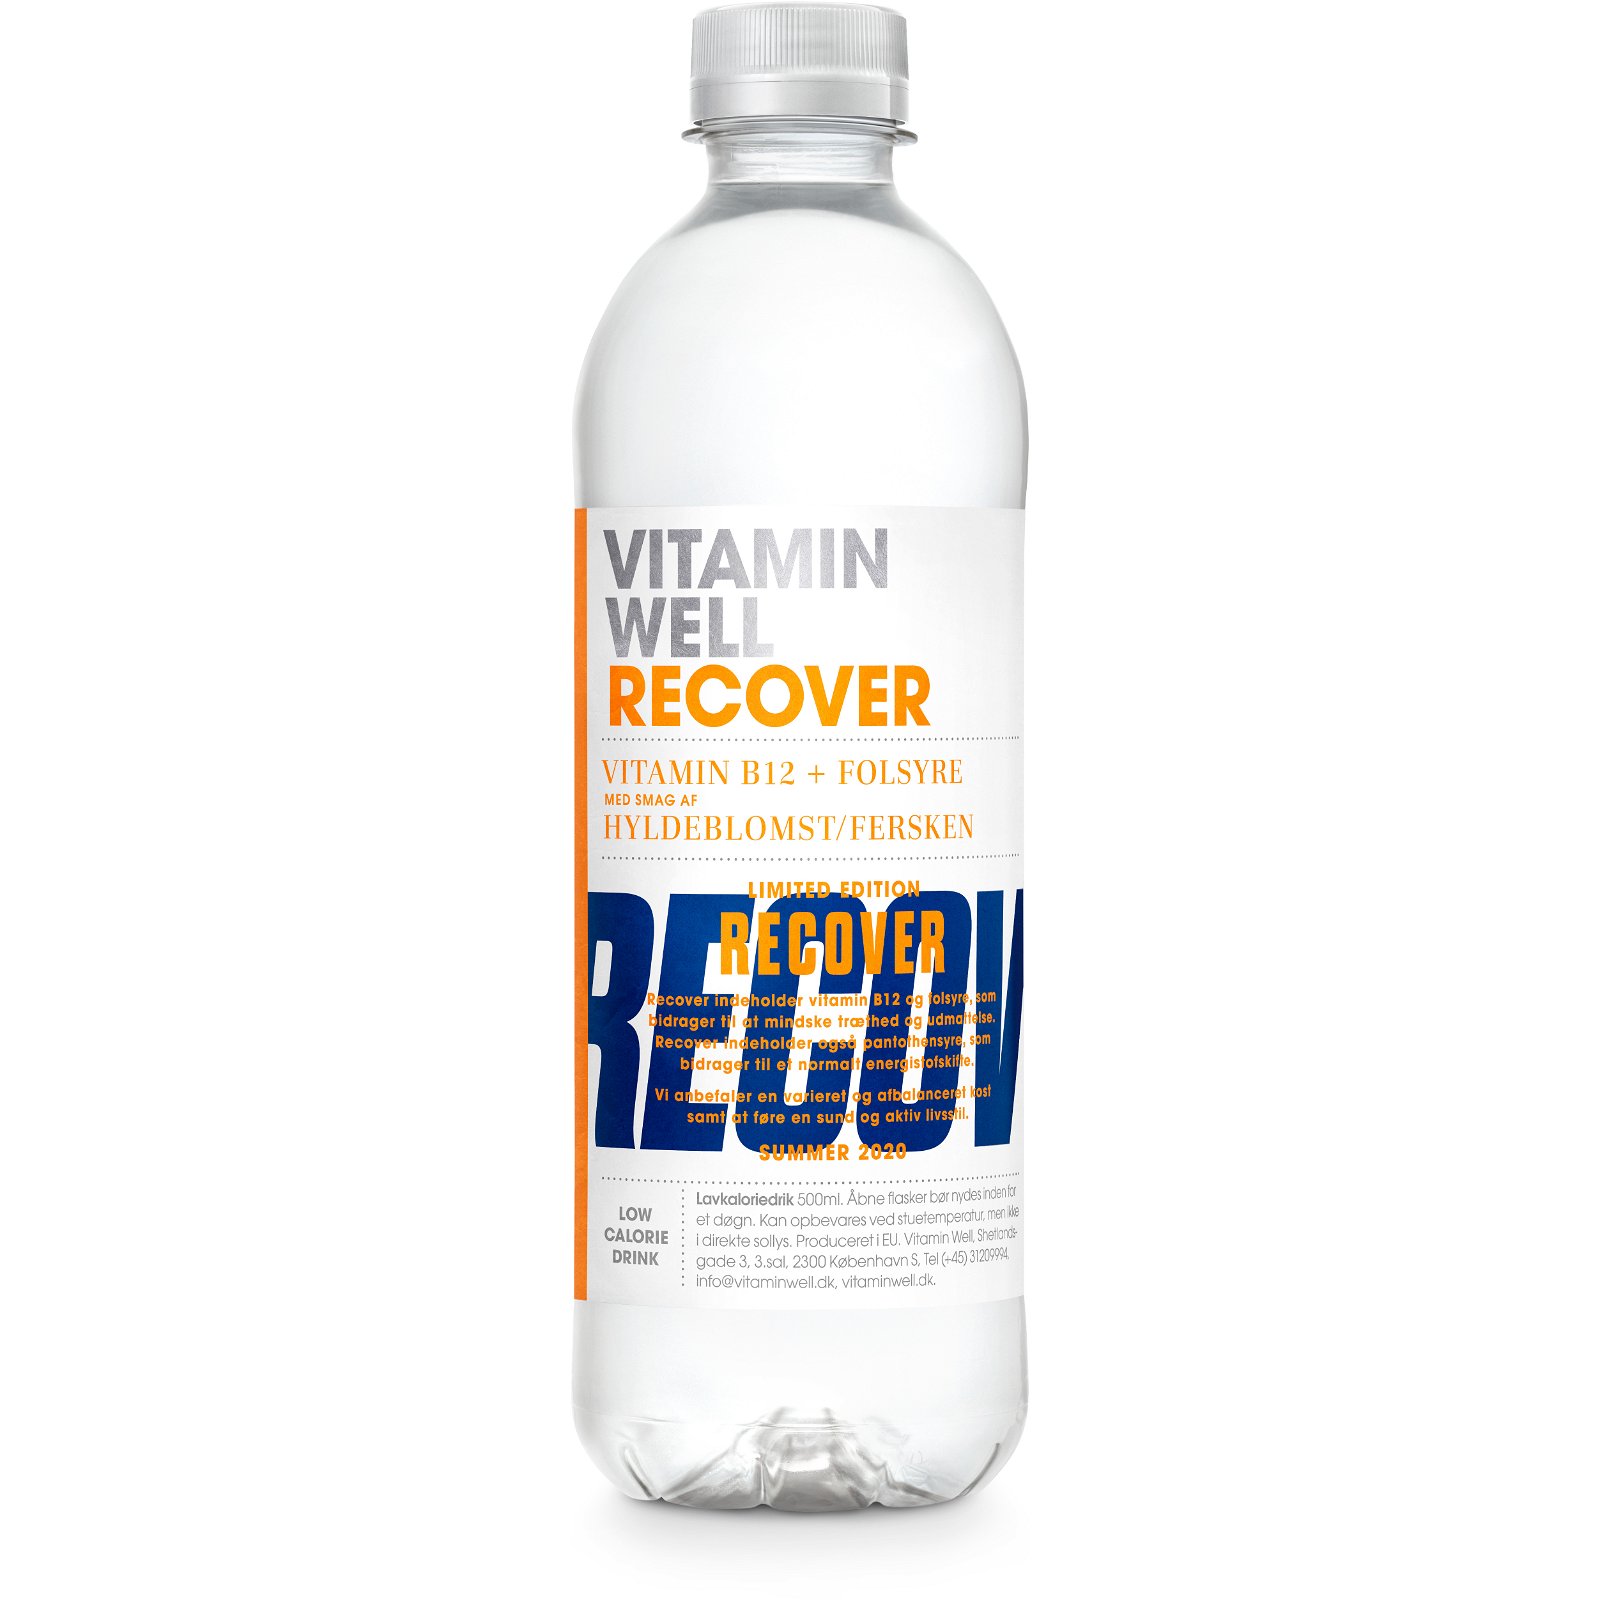 Vitamin Well Recover vitamindrik